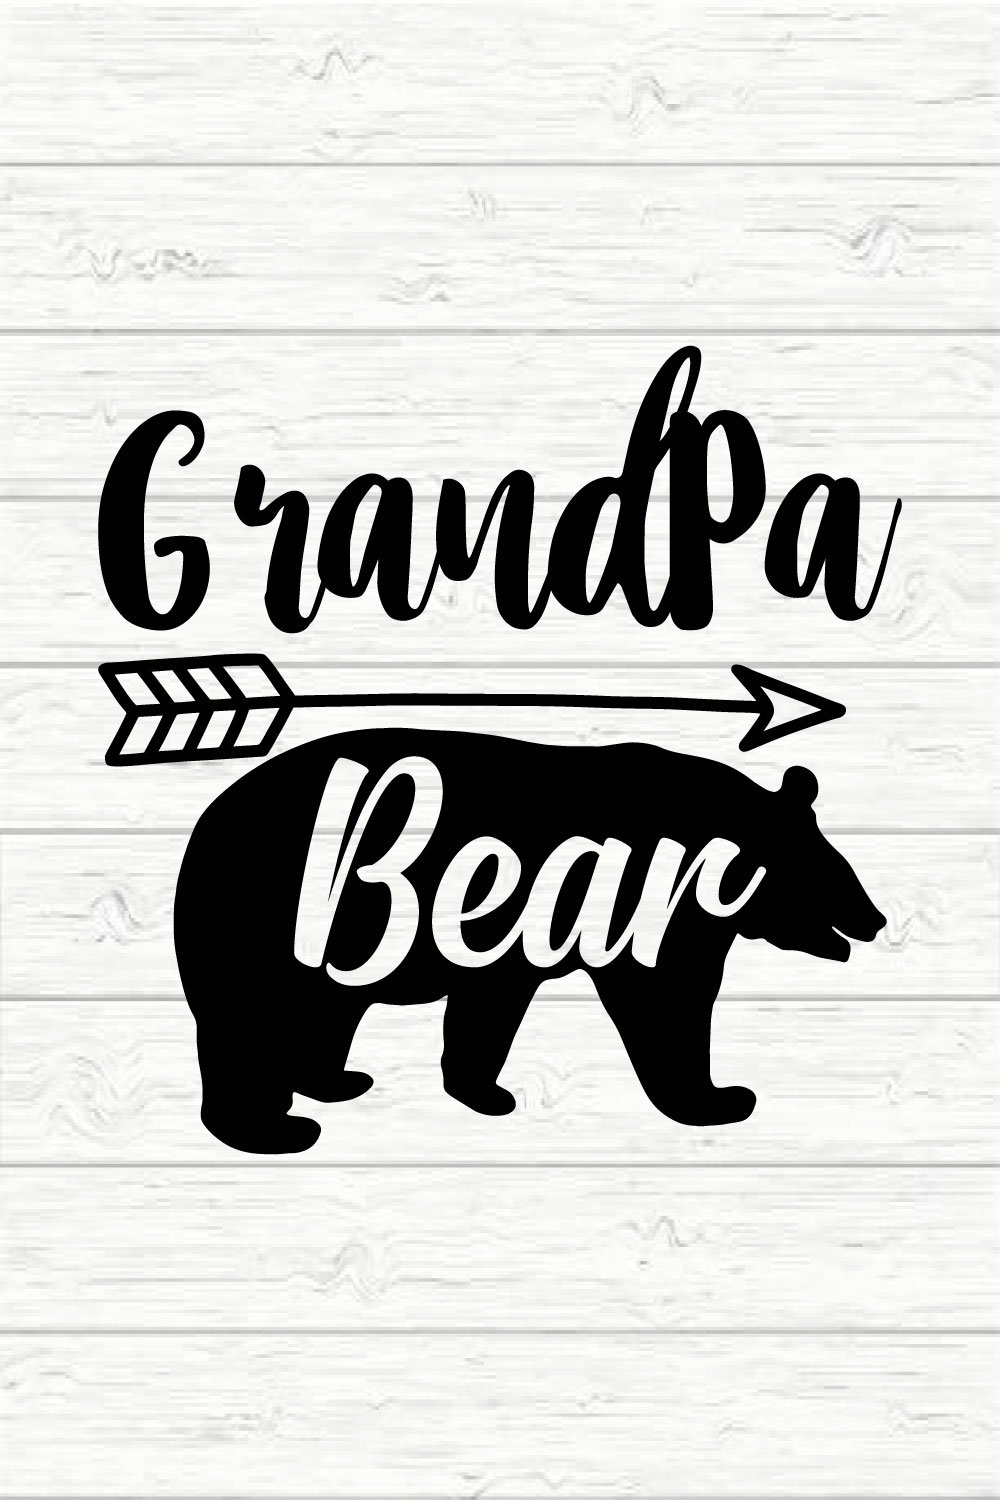 Grandpa Bear pinterest preview image.